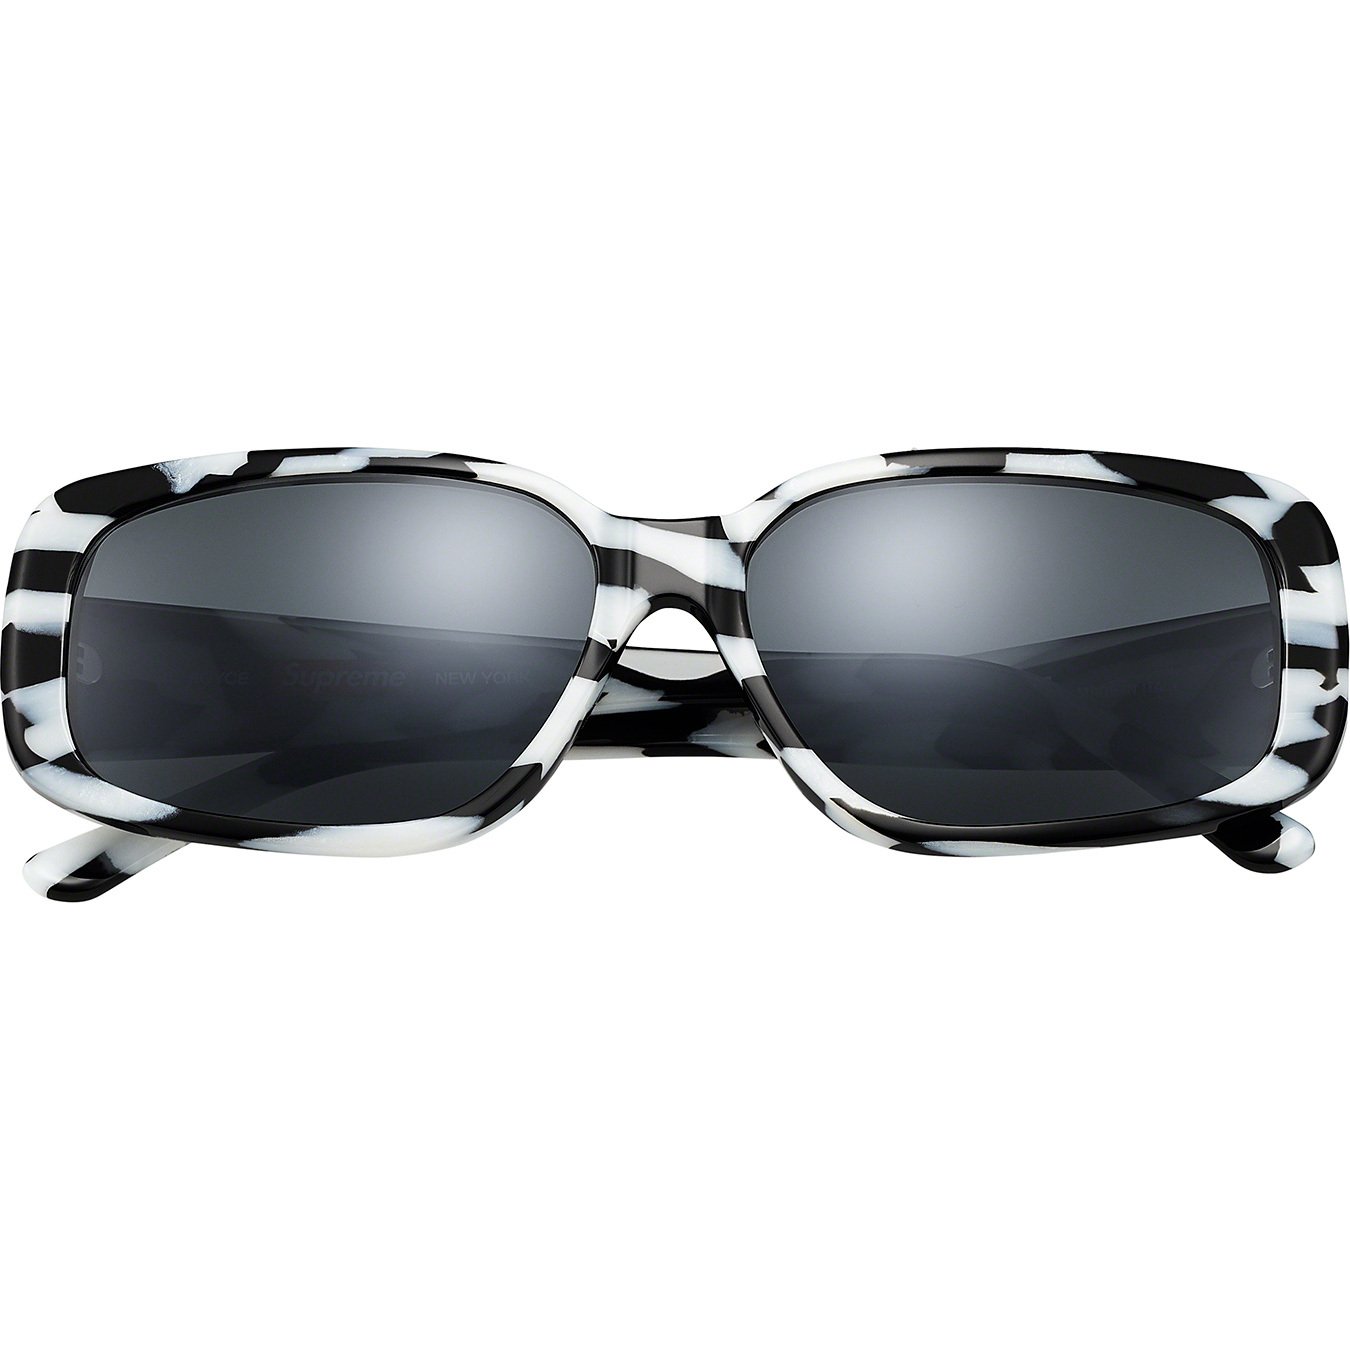 Royce Sunglasses - spring summer 2020 - Supreme